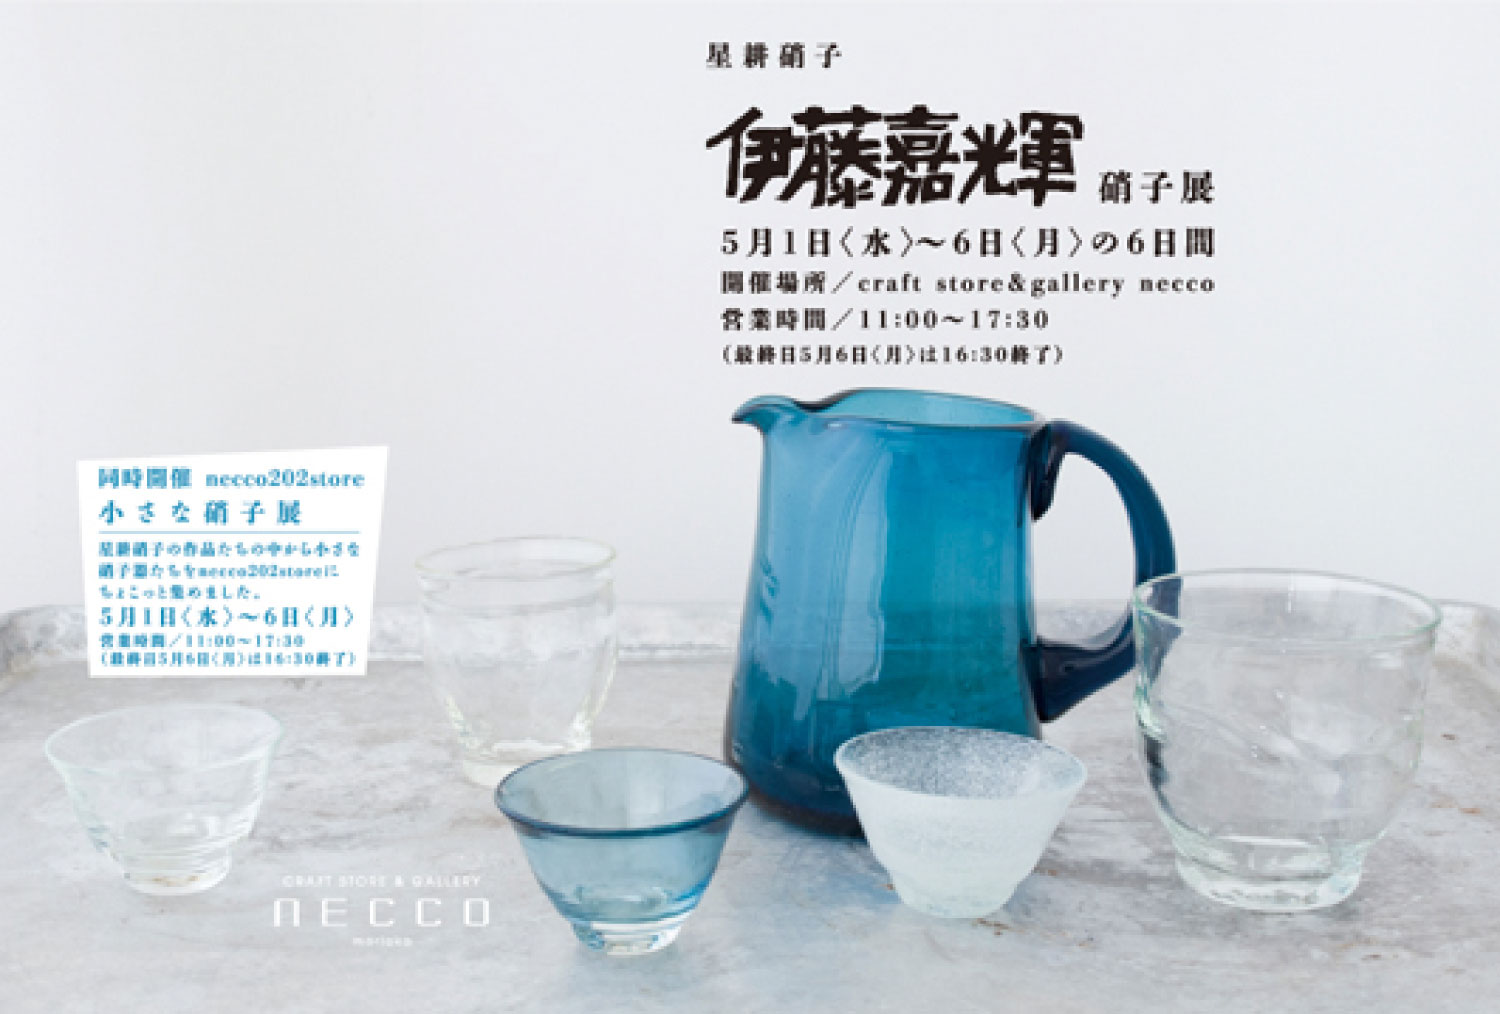 craft store＆gallery necco Yoshiteru ITO glass works Exibition 2013